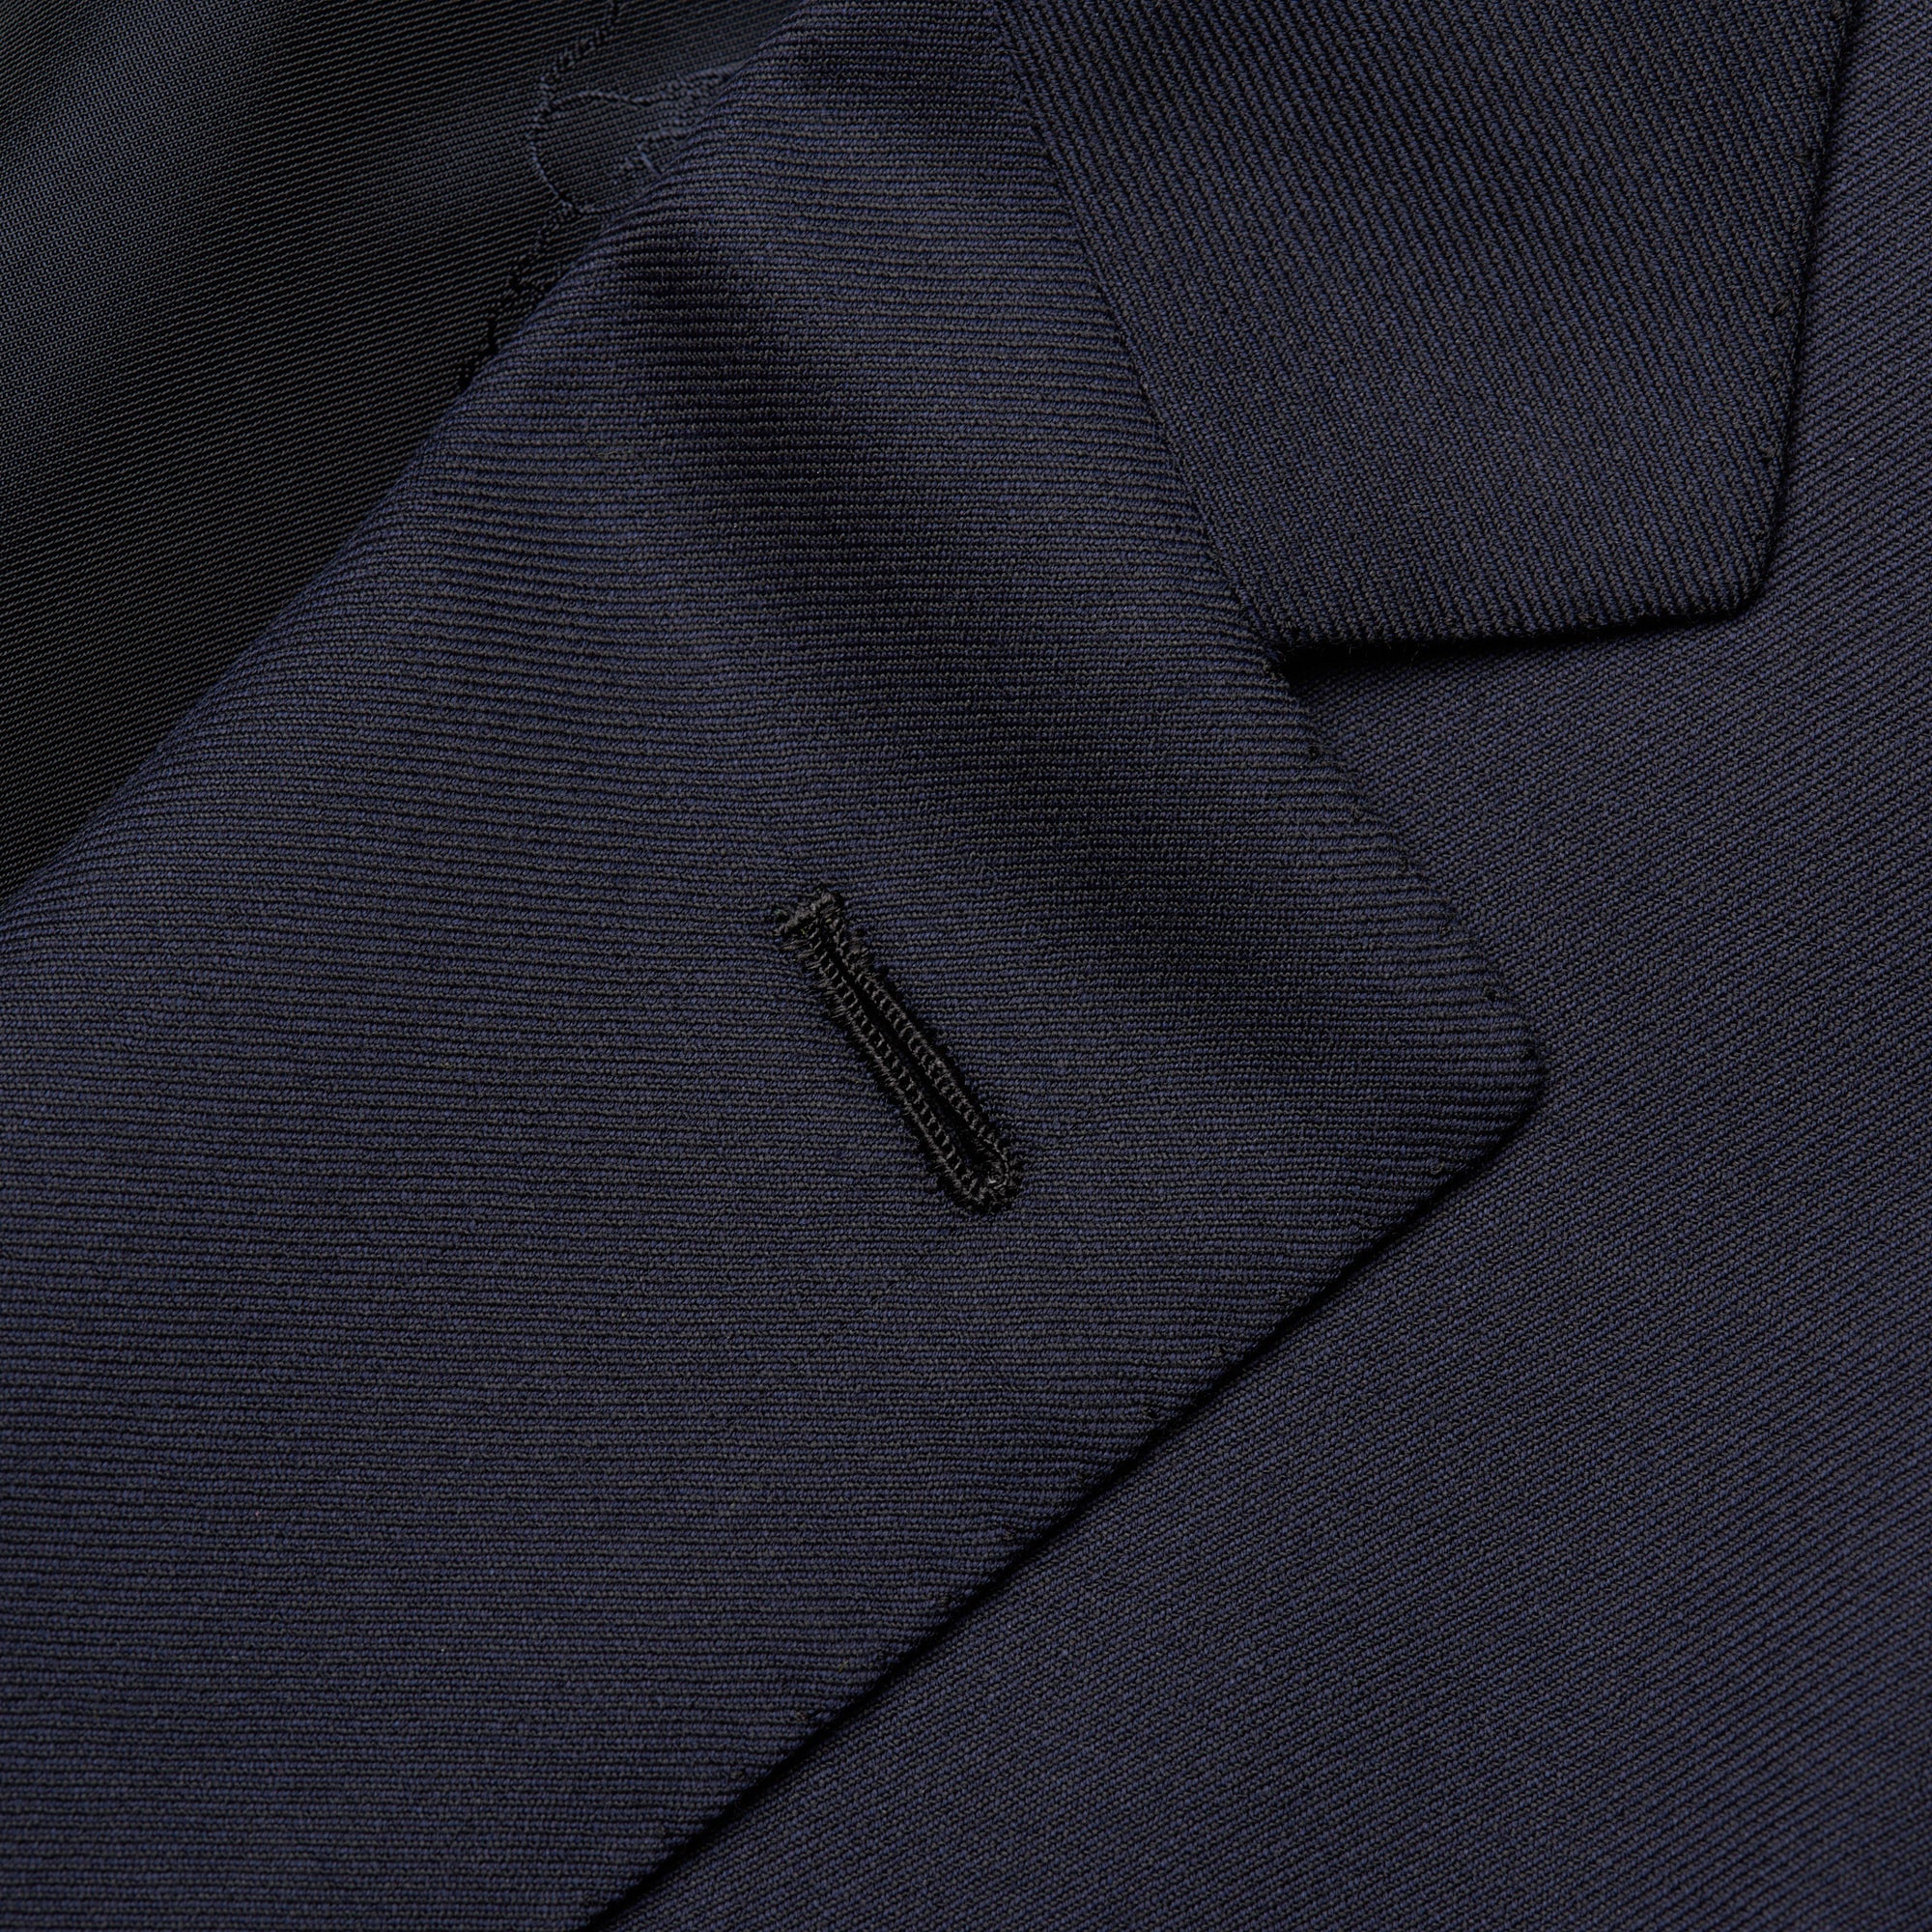 BRIONI "BRUNICO" Handmade Dark Navy Blue Wool Business Suit EU 62 NEW US 52 BRIONI